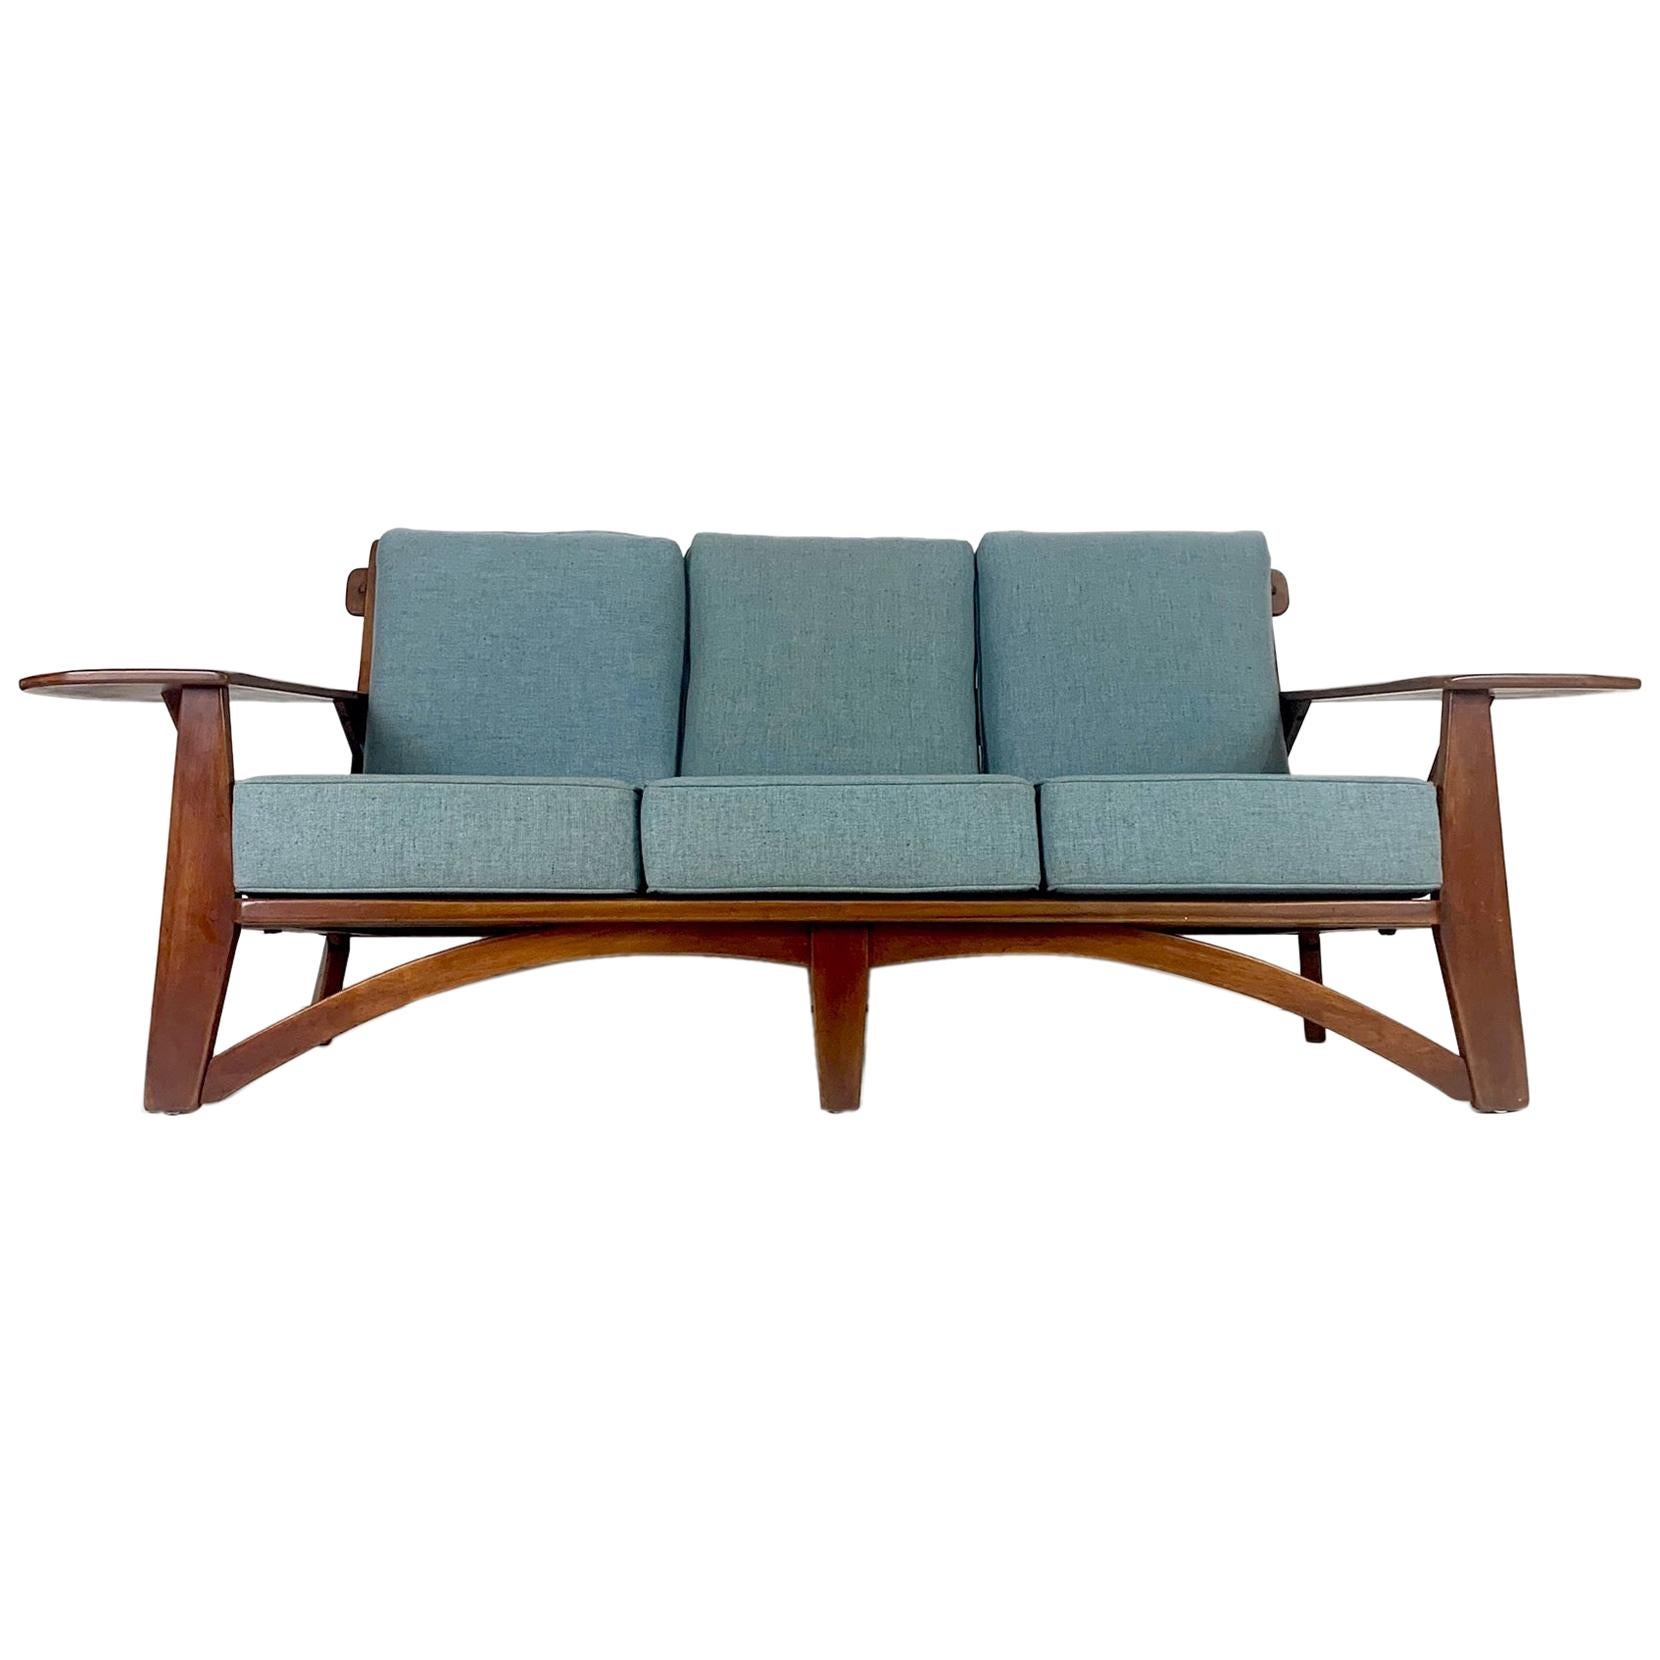 Impressive 1930s Cushman Maple Paddle Arm Sofa Designed by William DeVries